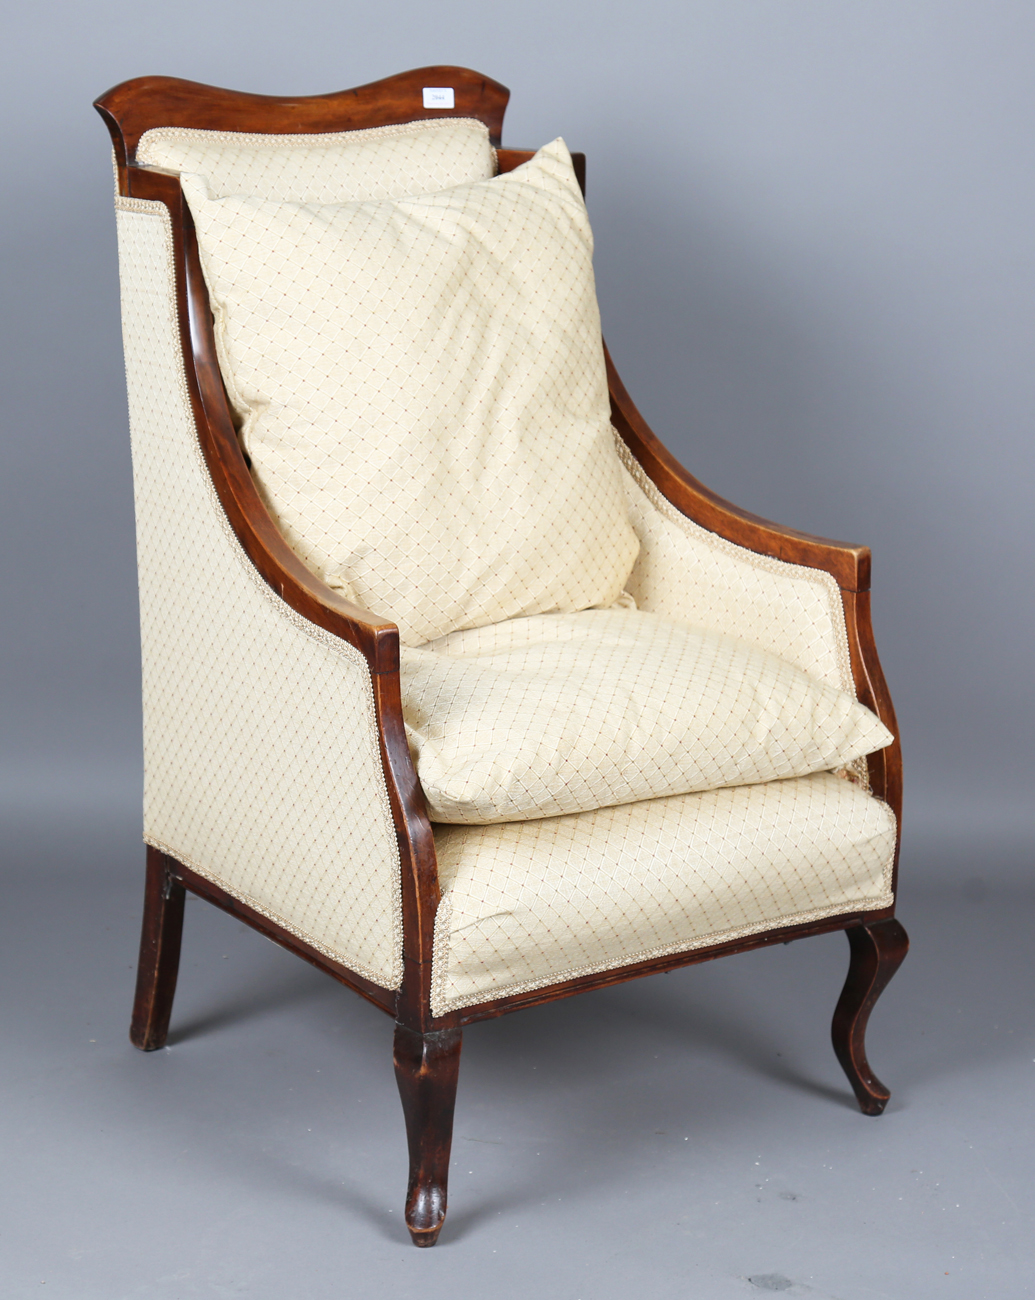 An Edwardian walnut framed armchair, upholstered in cream damask, height 109cm, width 65cm, together